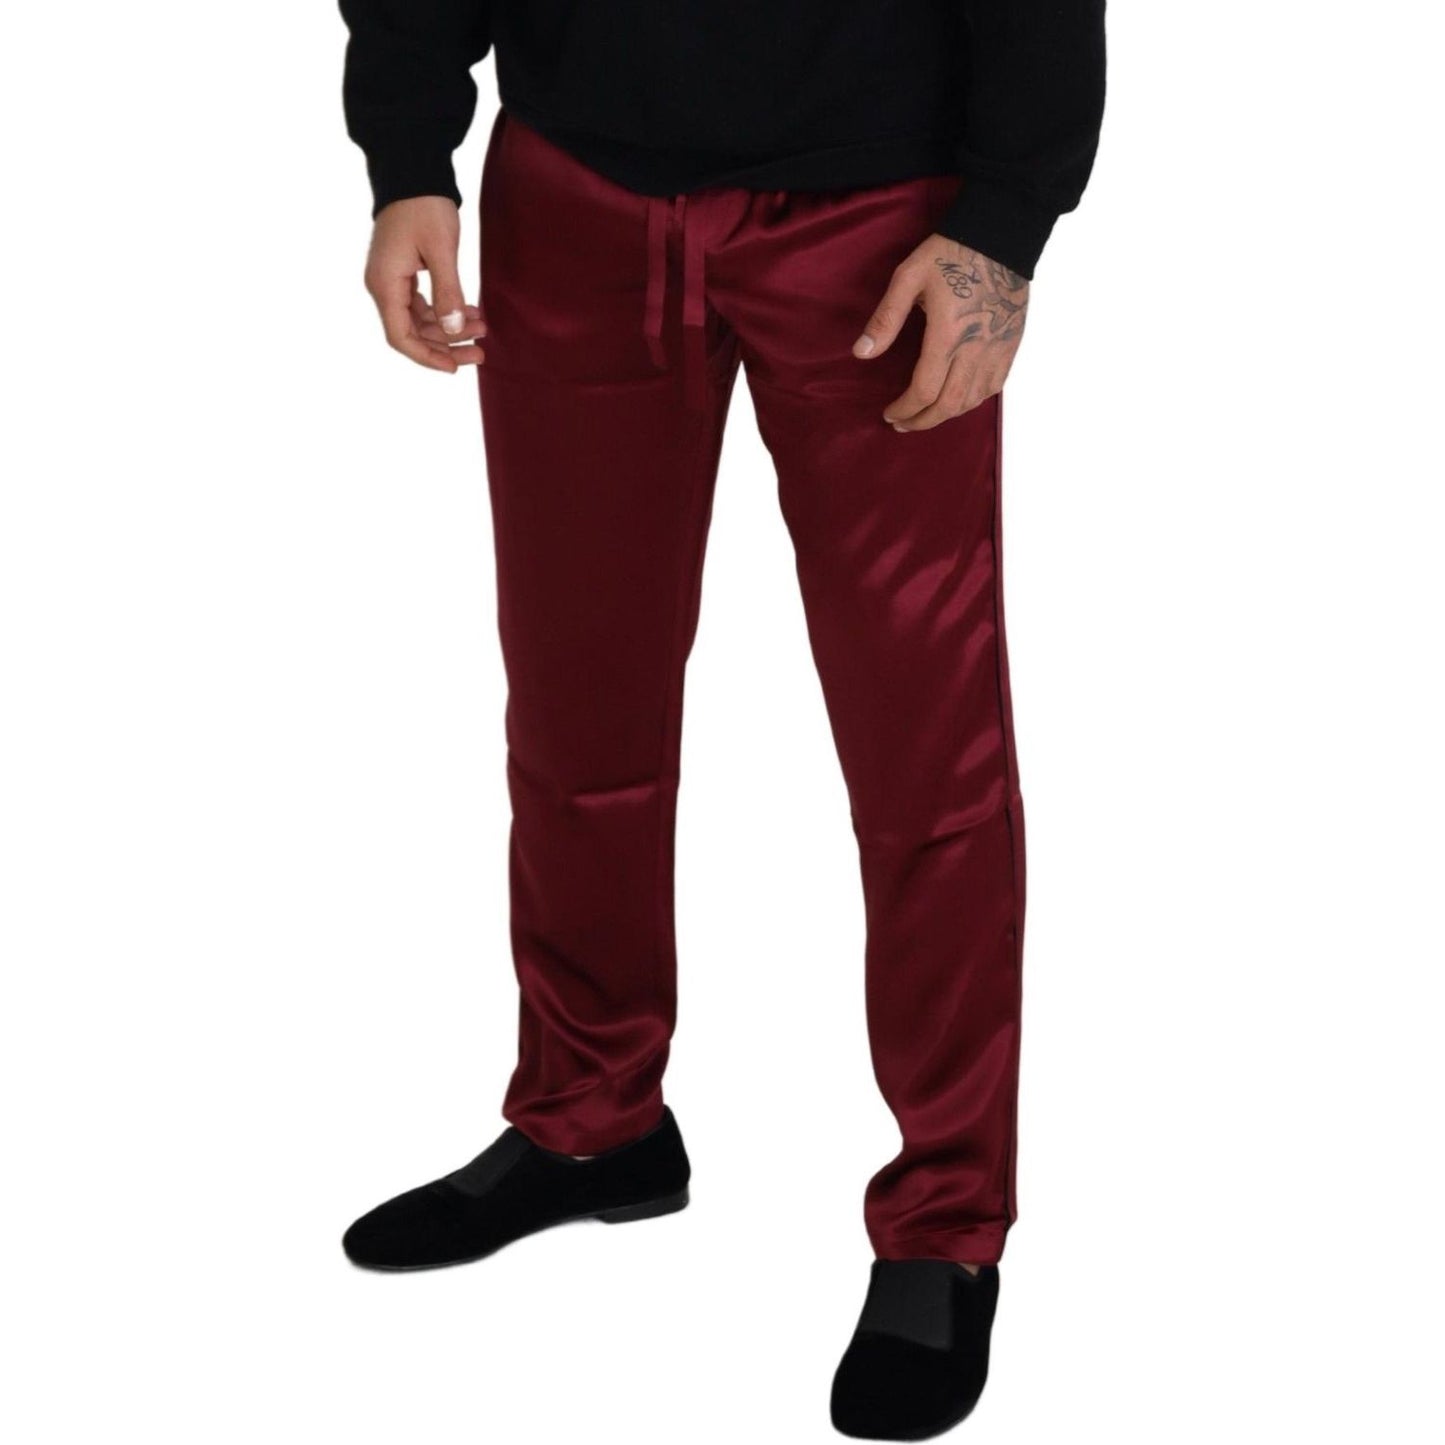 Dolce & Gabbana Silk Lounge Pants in Bordeaux bordeaux-silk-dg-sleep-lounge-pants Jeans & Pants IMG_7182-8338223b-d55.jpg